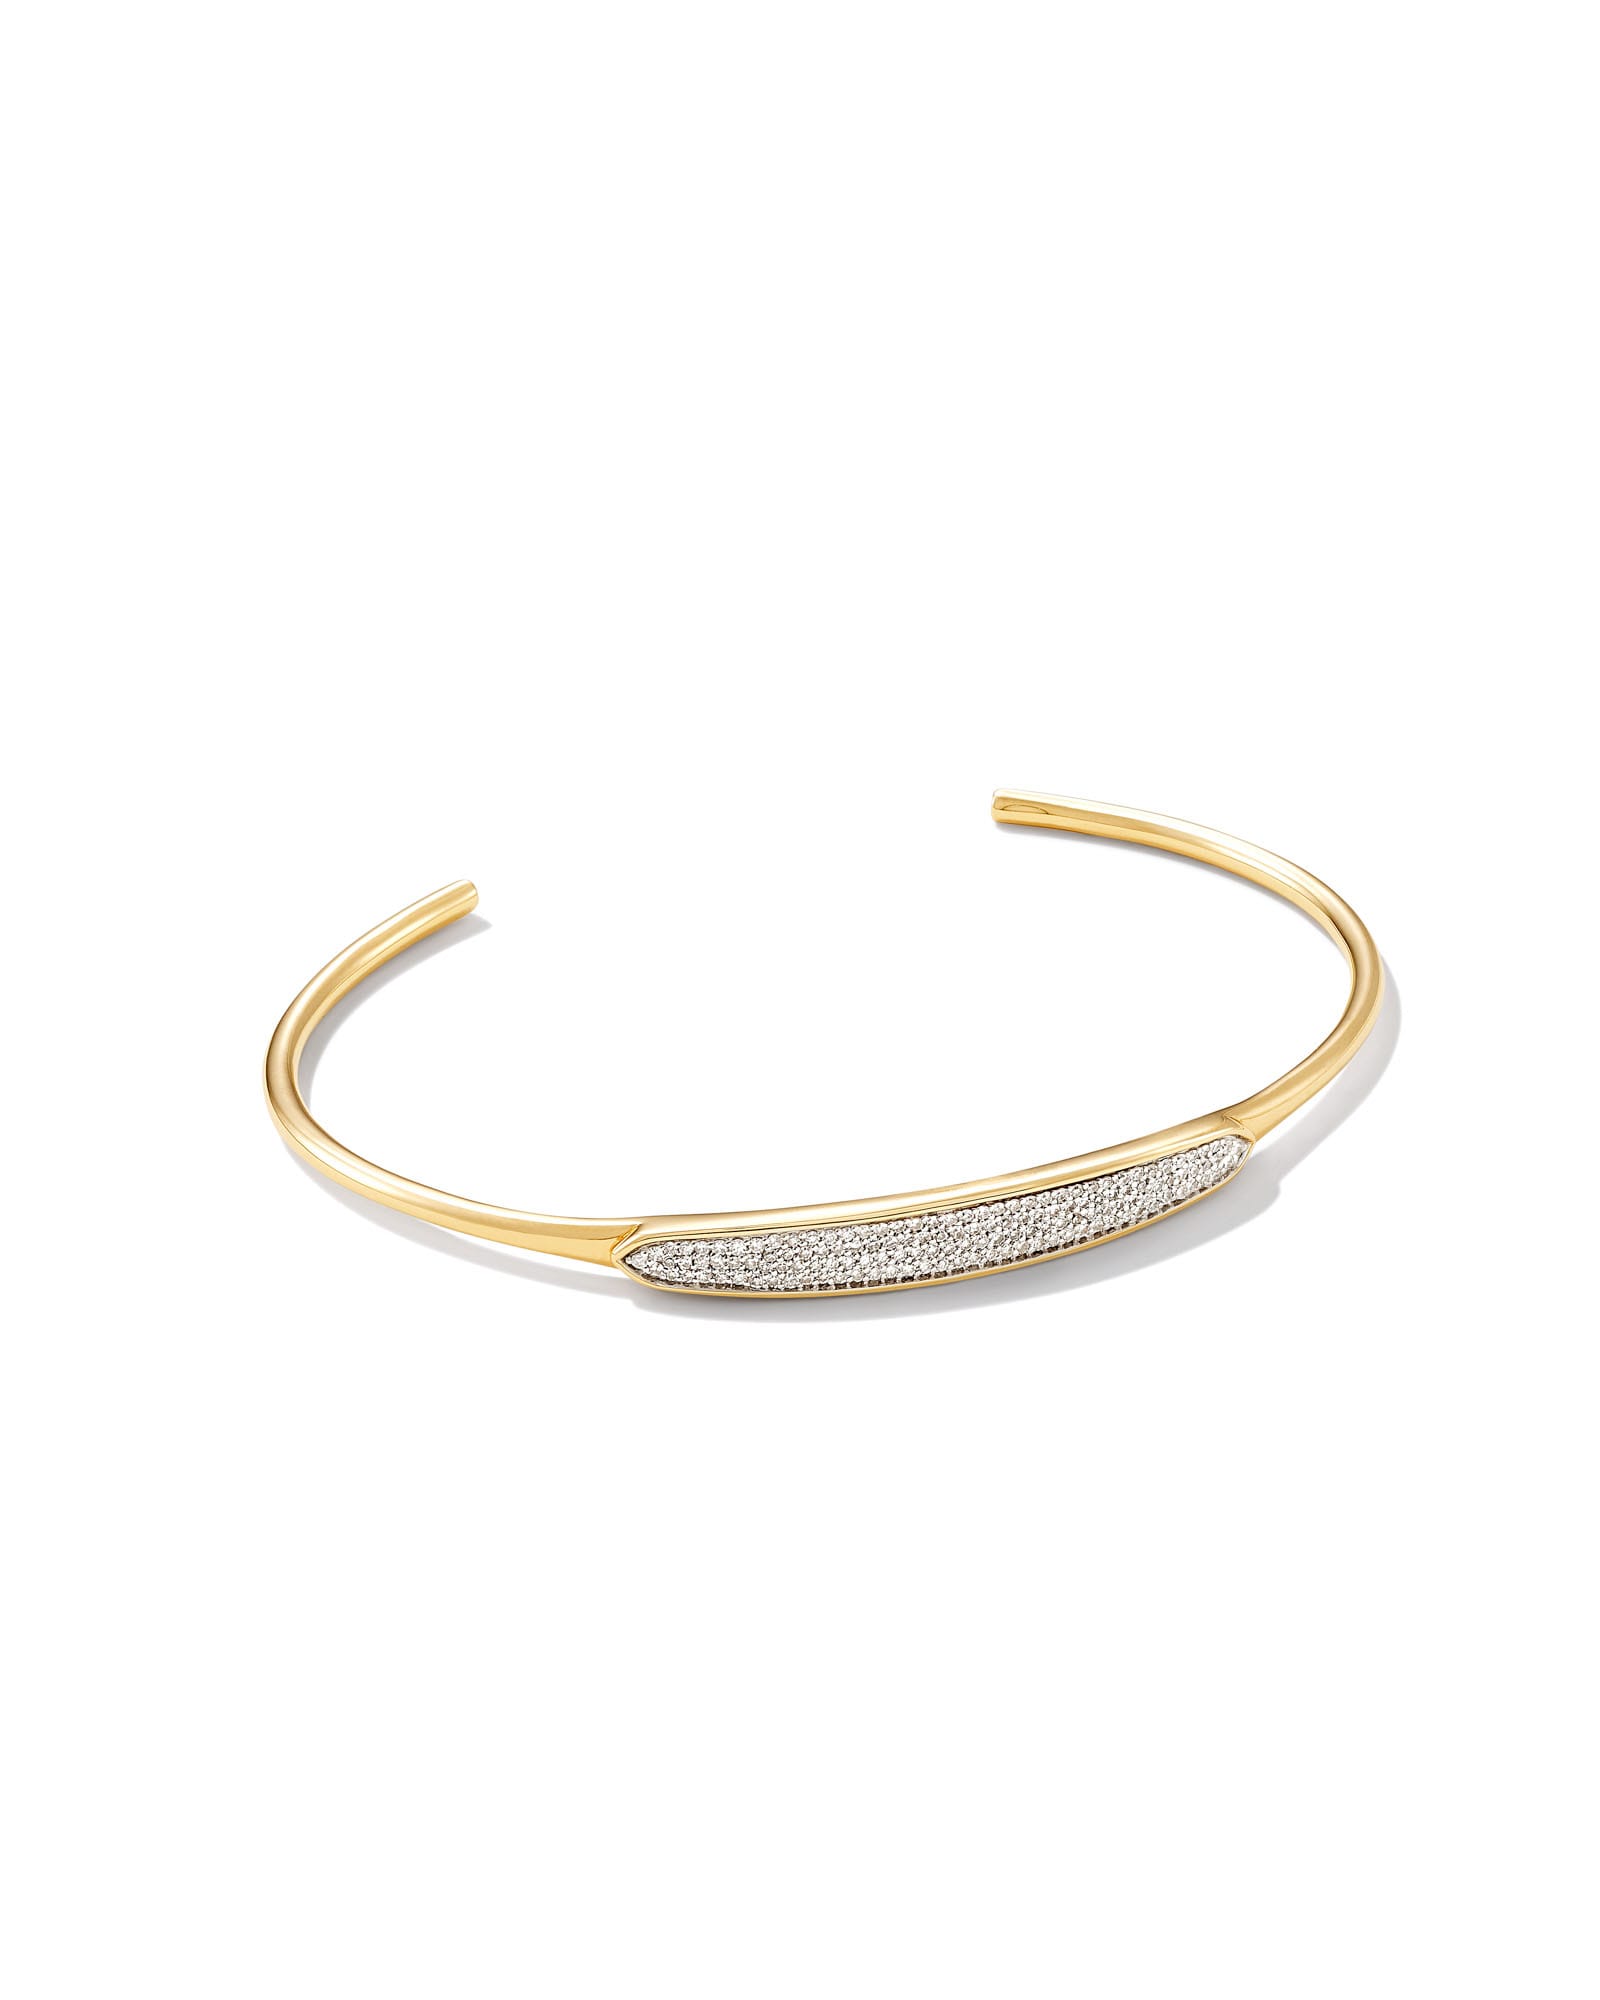 Marisa 14k Yellow Gold Statement Cuff Bracelet in White Diamond